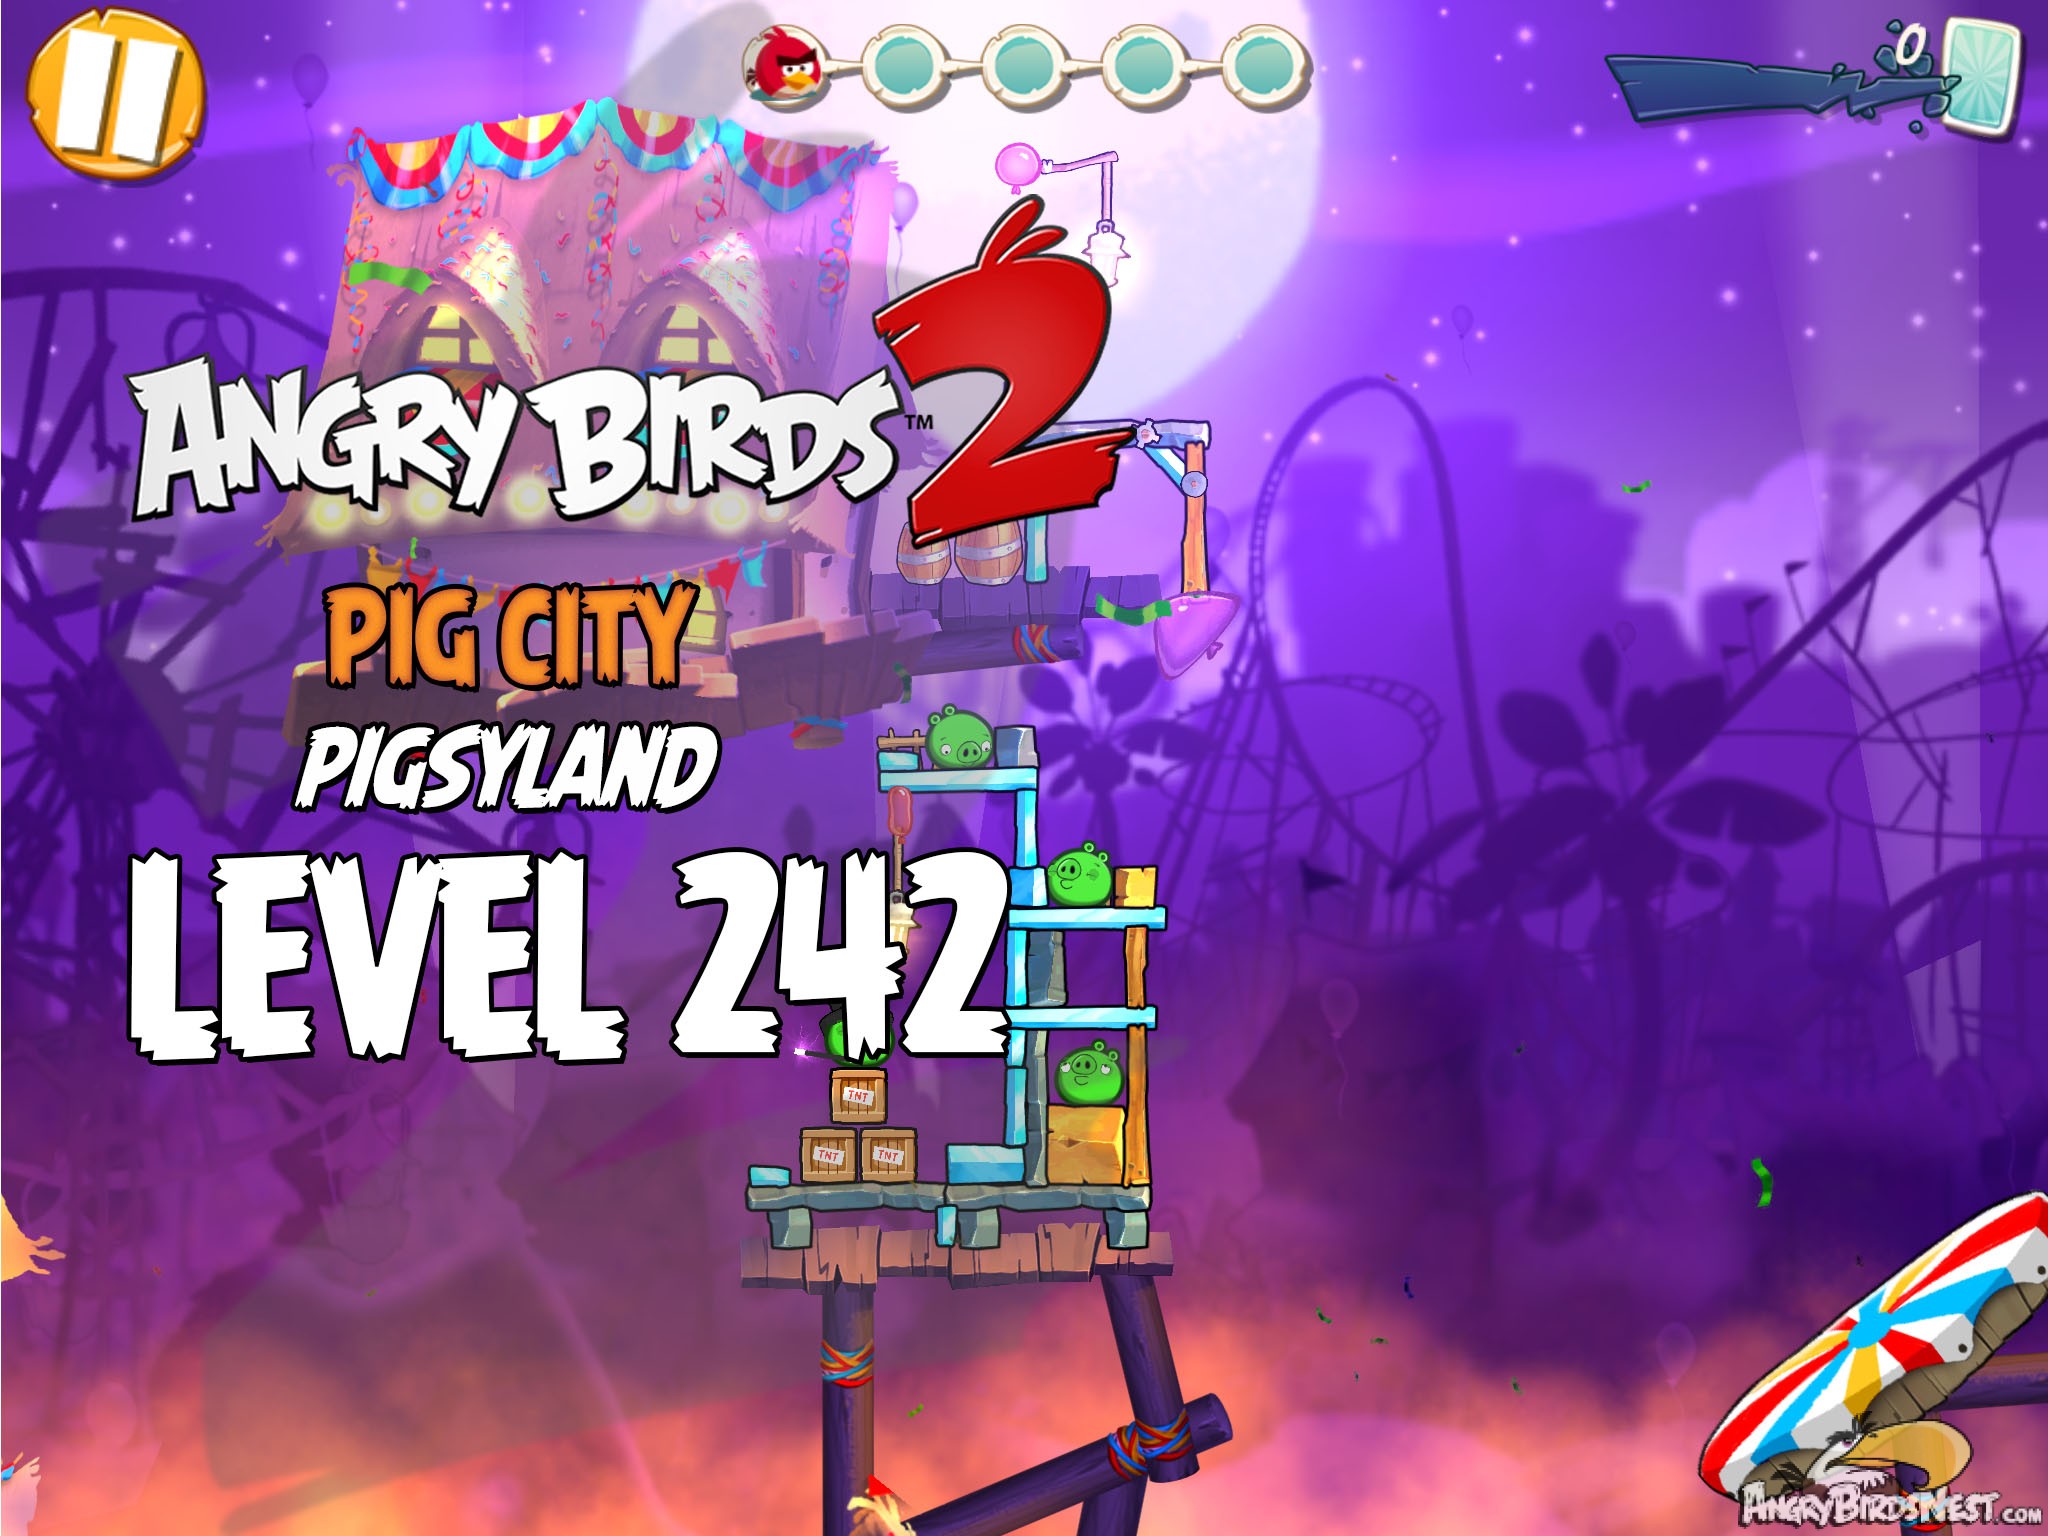 angry-birds-2-level-242-pig-city-pigsyland-3-star-walkthrough-angrybirdsnest